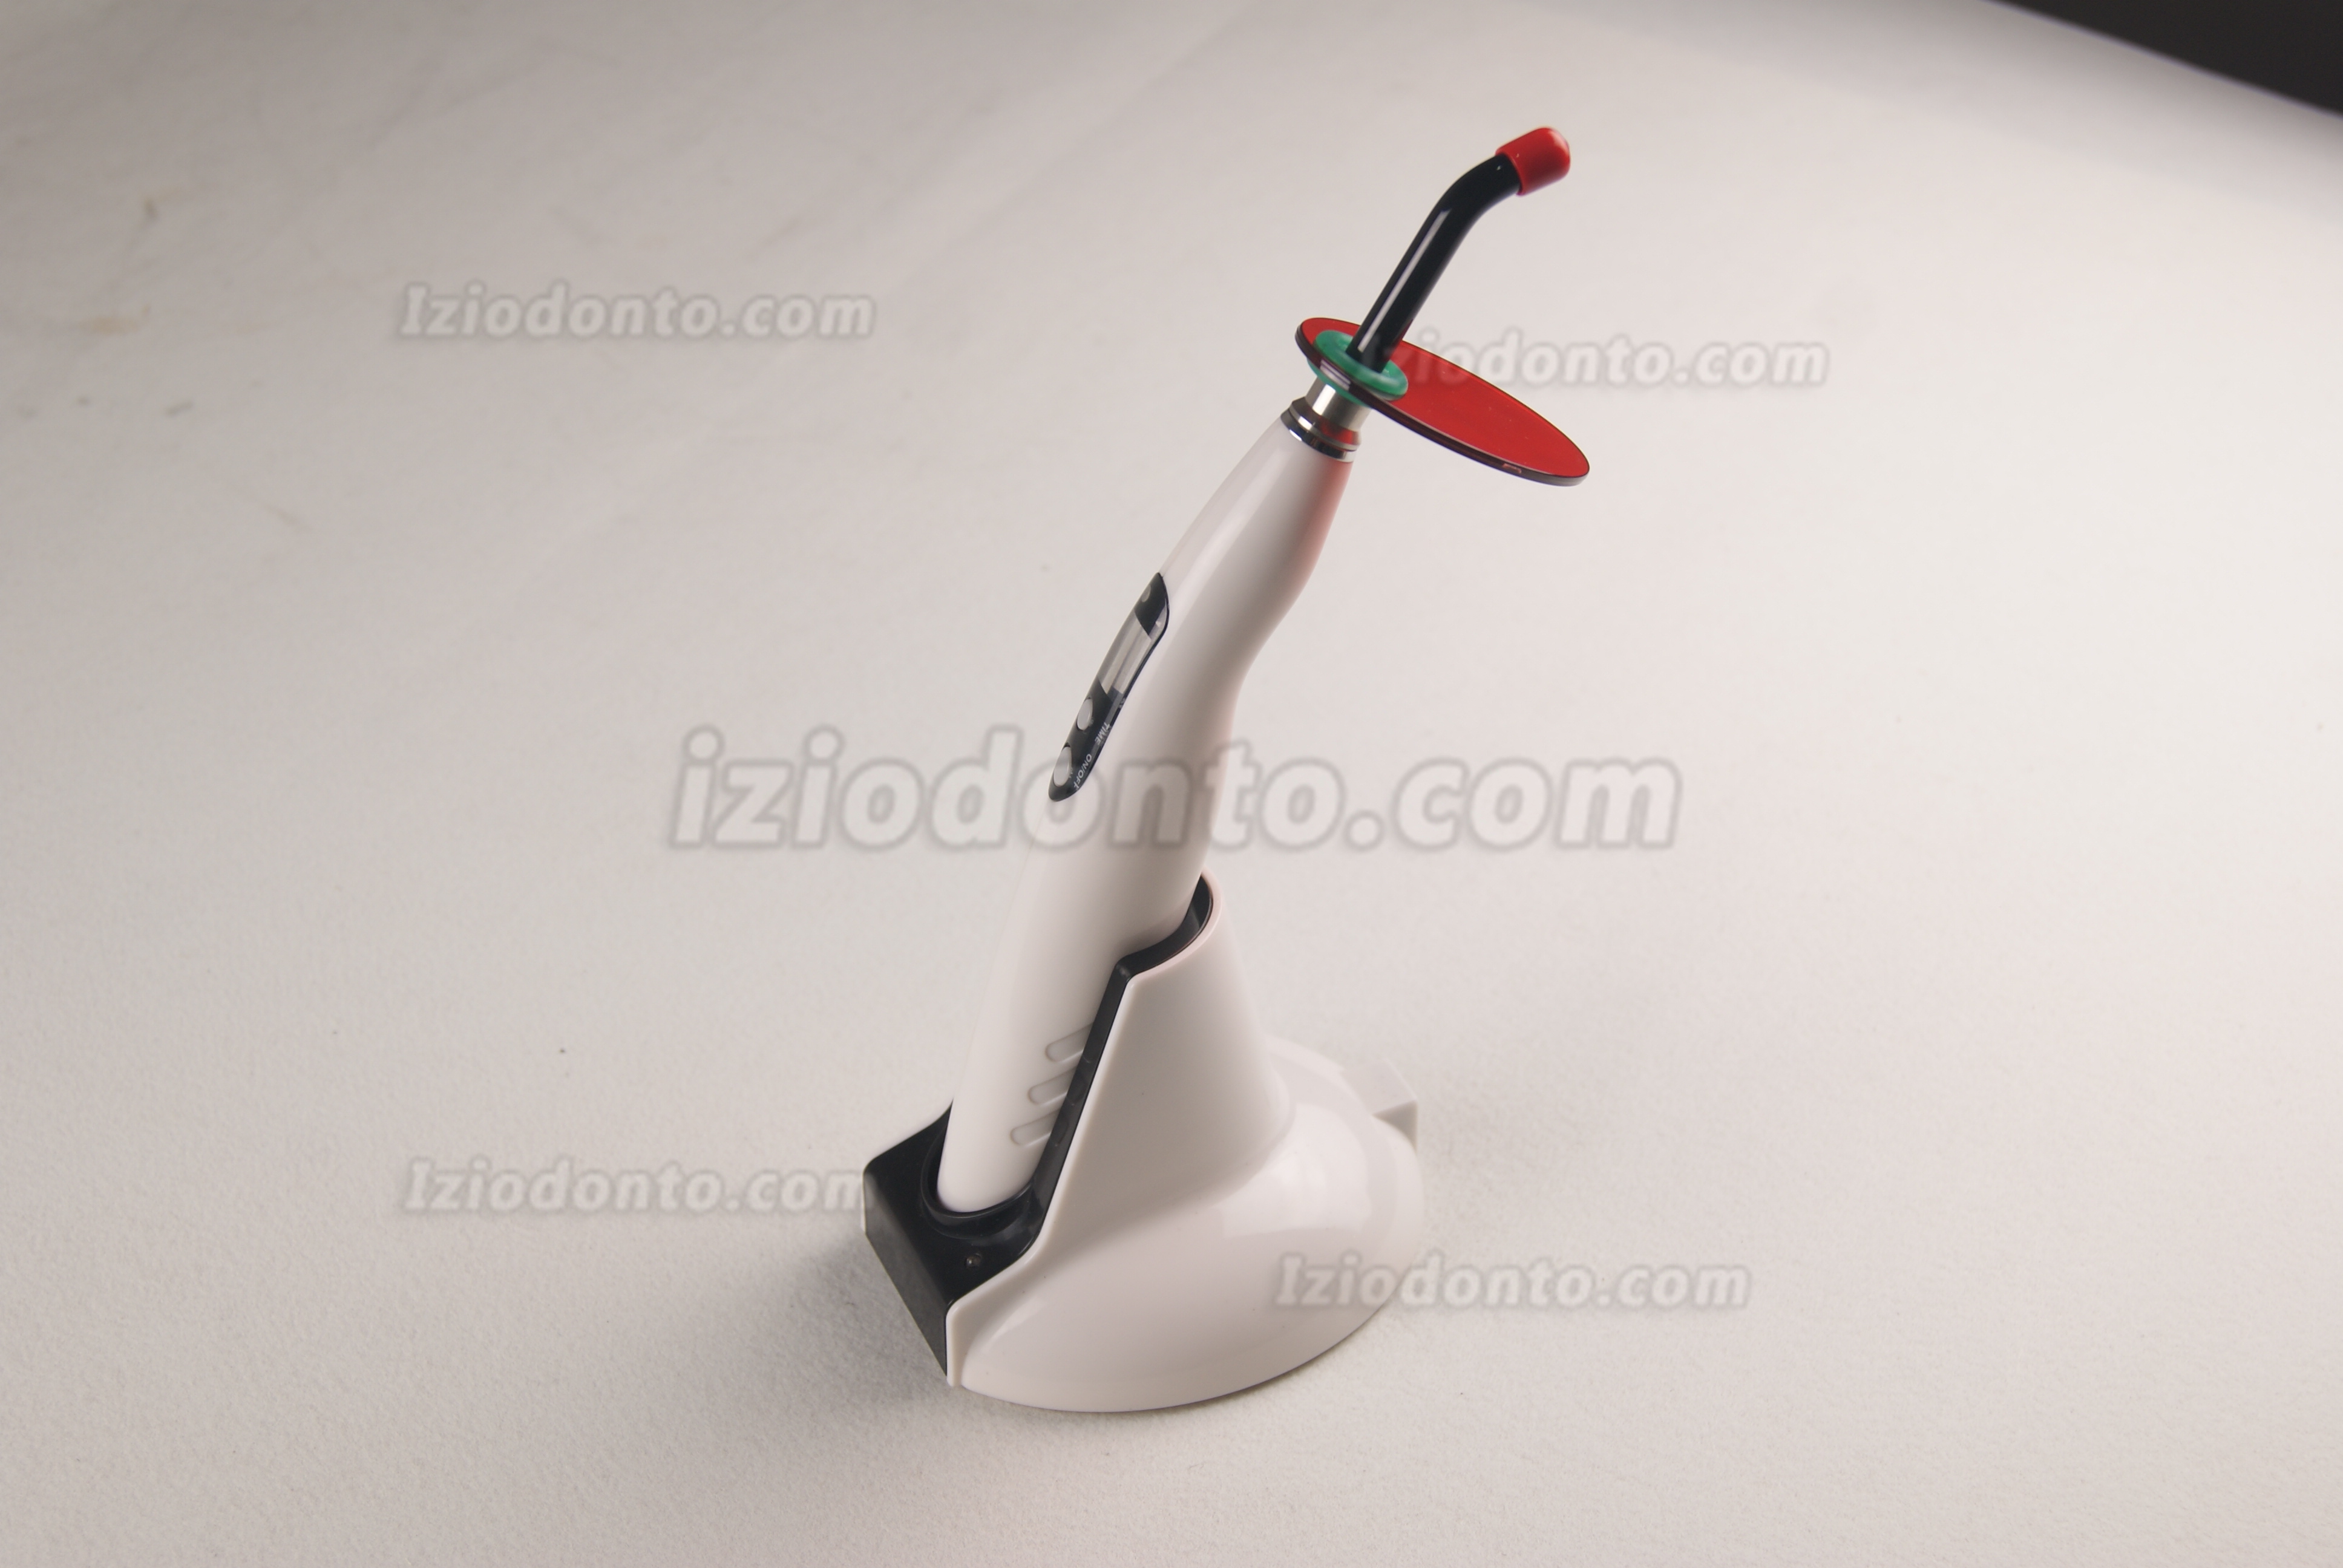 Woodpecker® Dental Fotopolimerizador LED.B